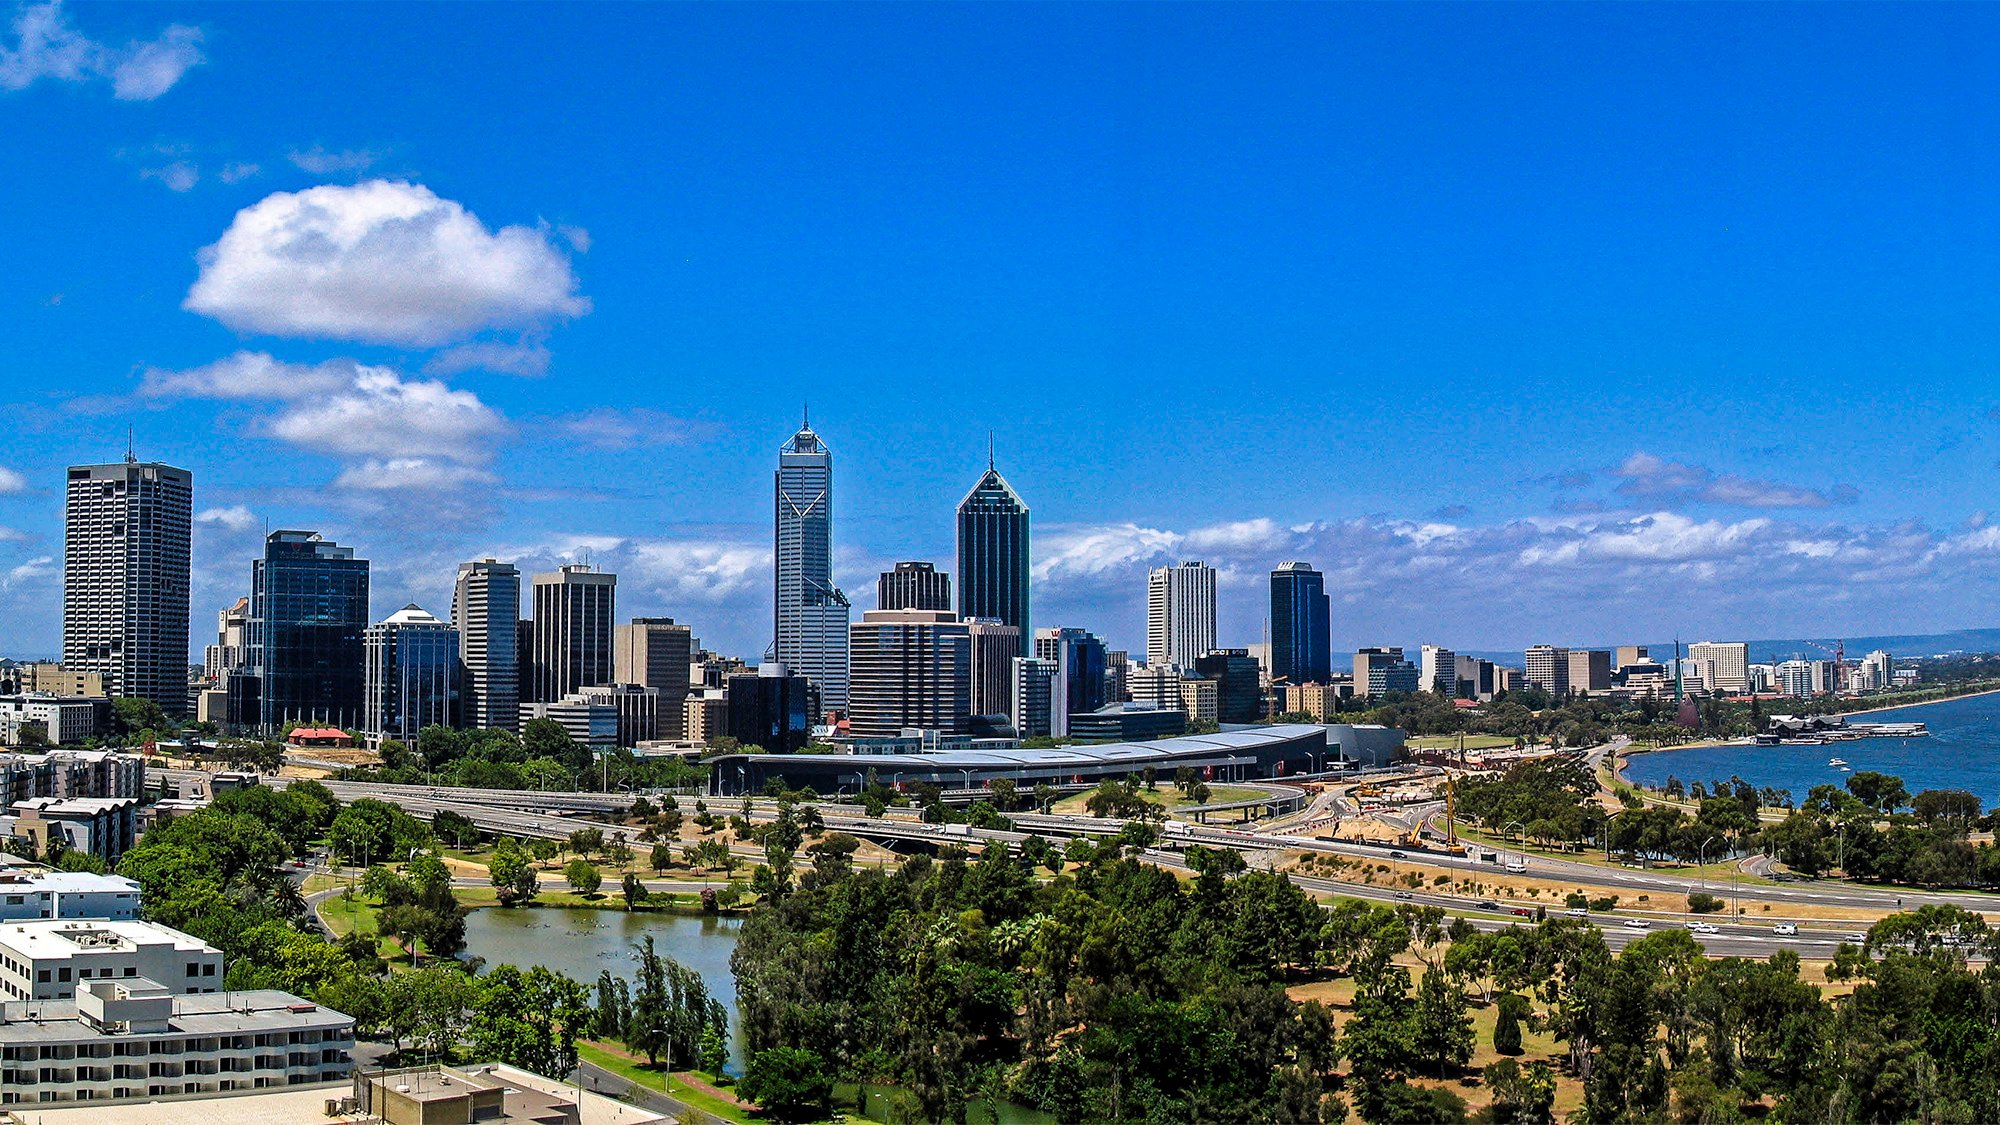 The city of Perth Australia